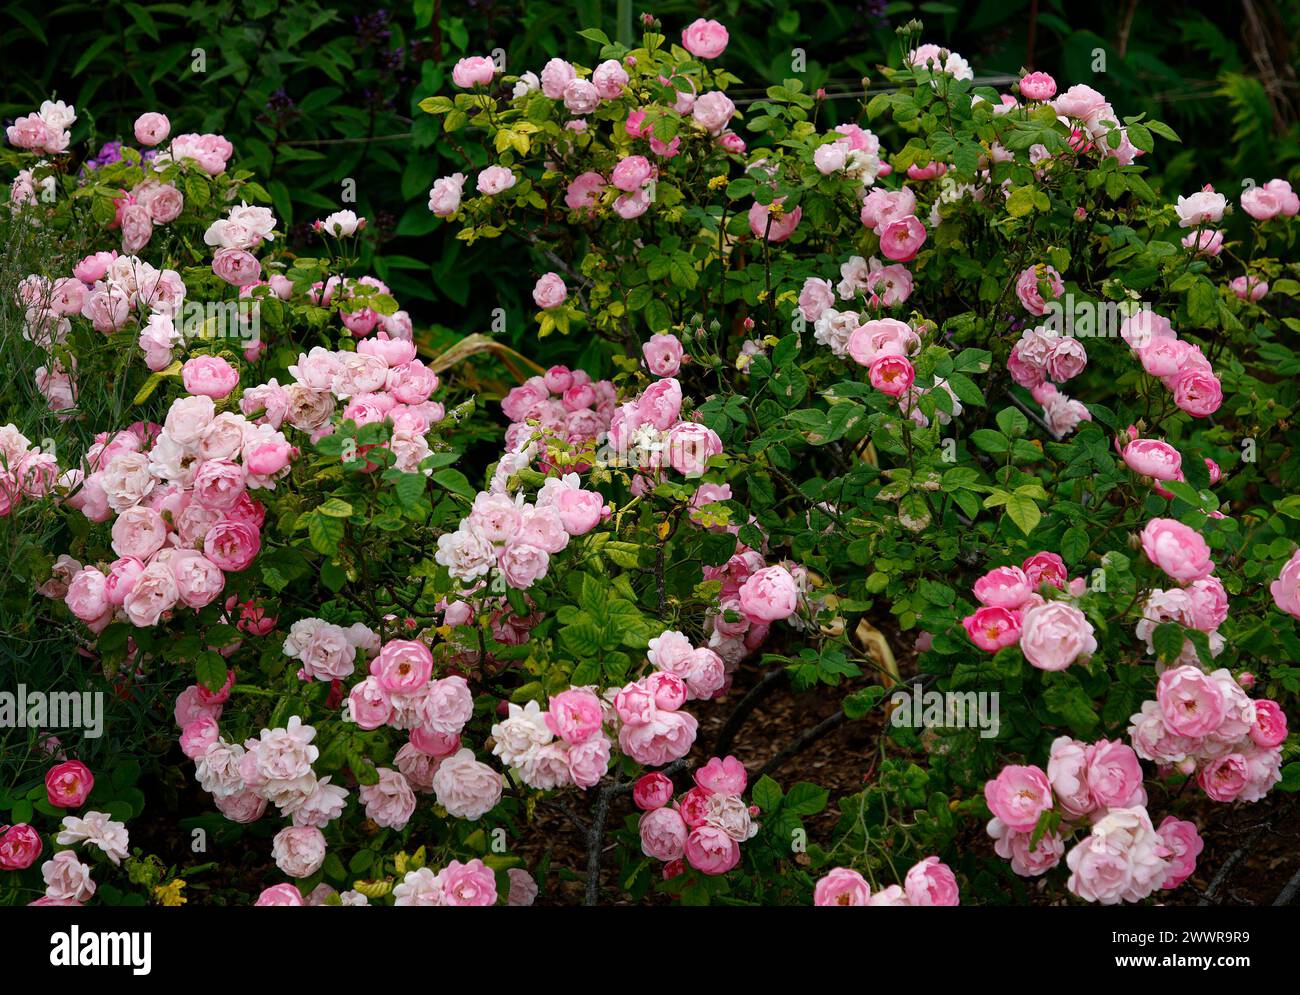 Closeup of the pink flowers of the garden shrub rose rosa raubritter macrantha. Stock Photo